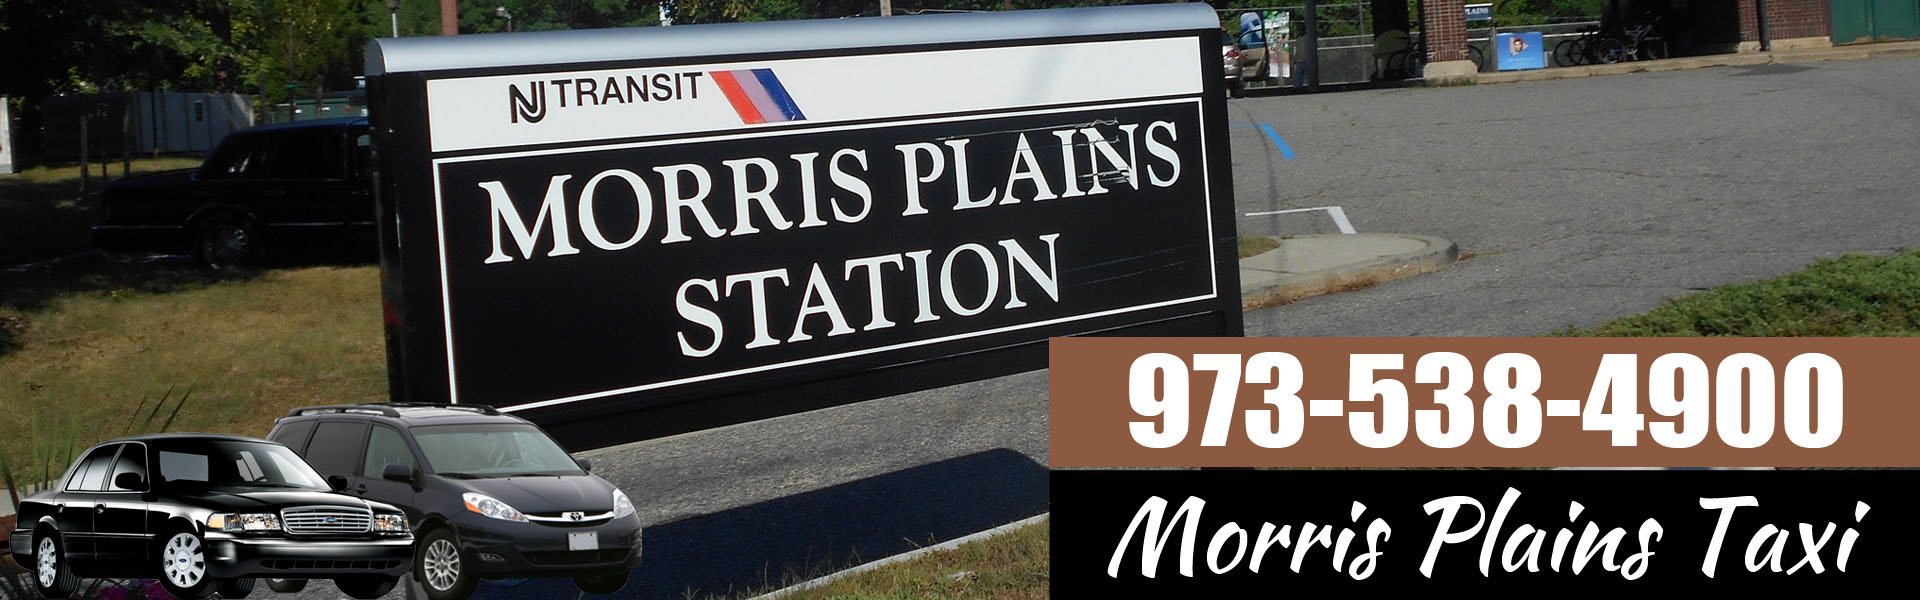 Morris Plains to Newark Airport Taxi Service